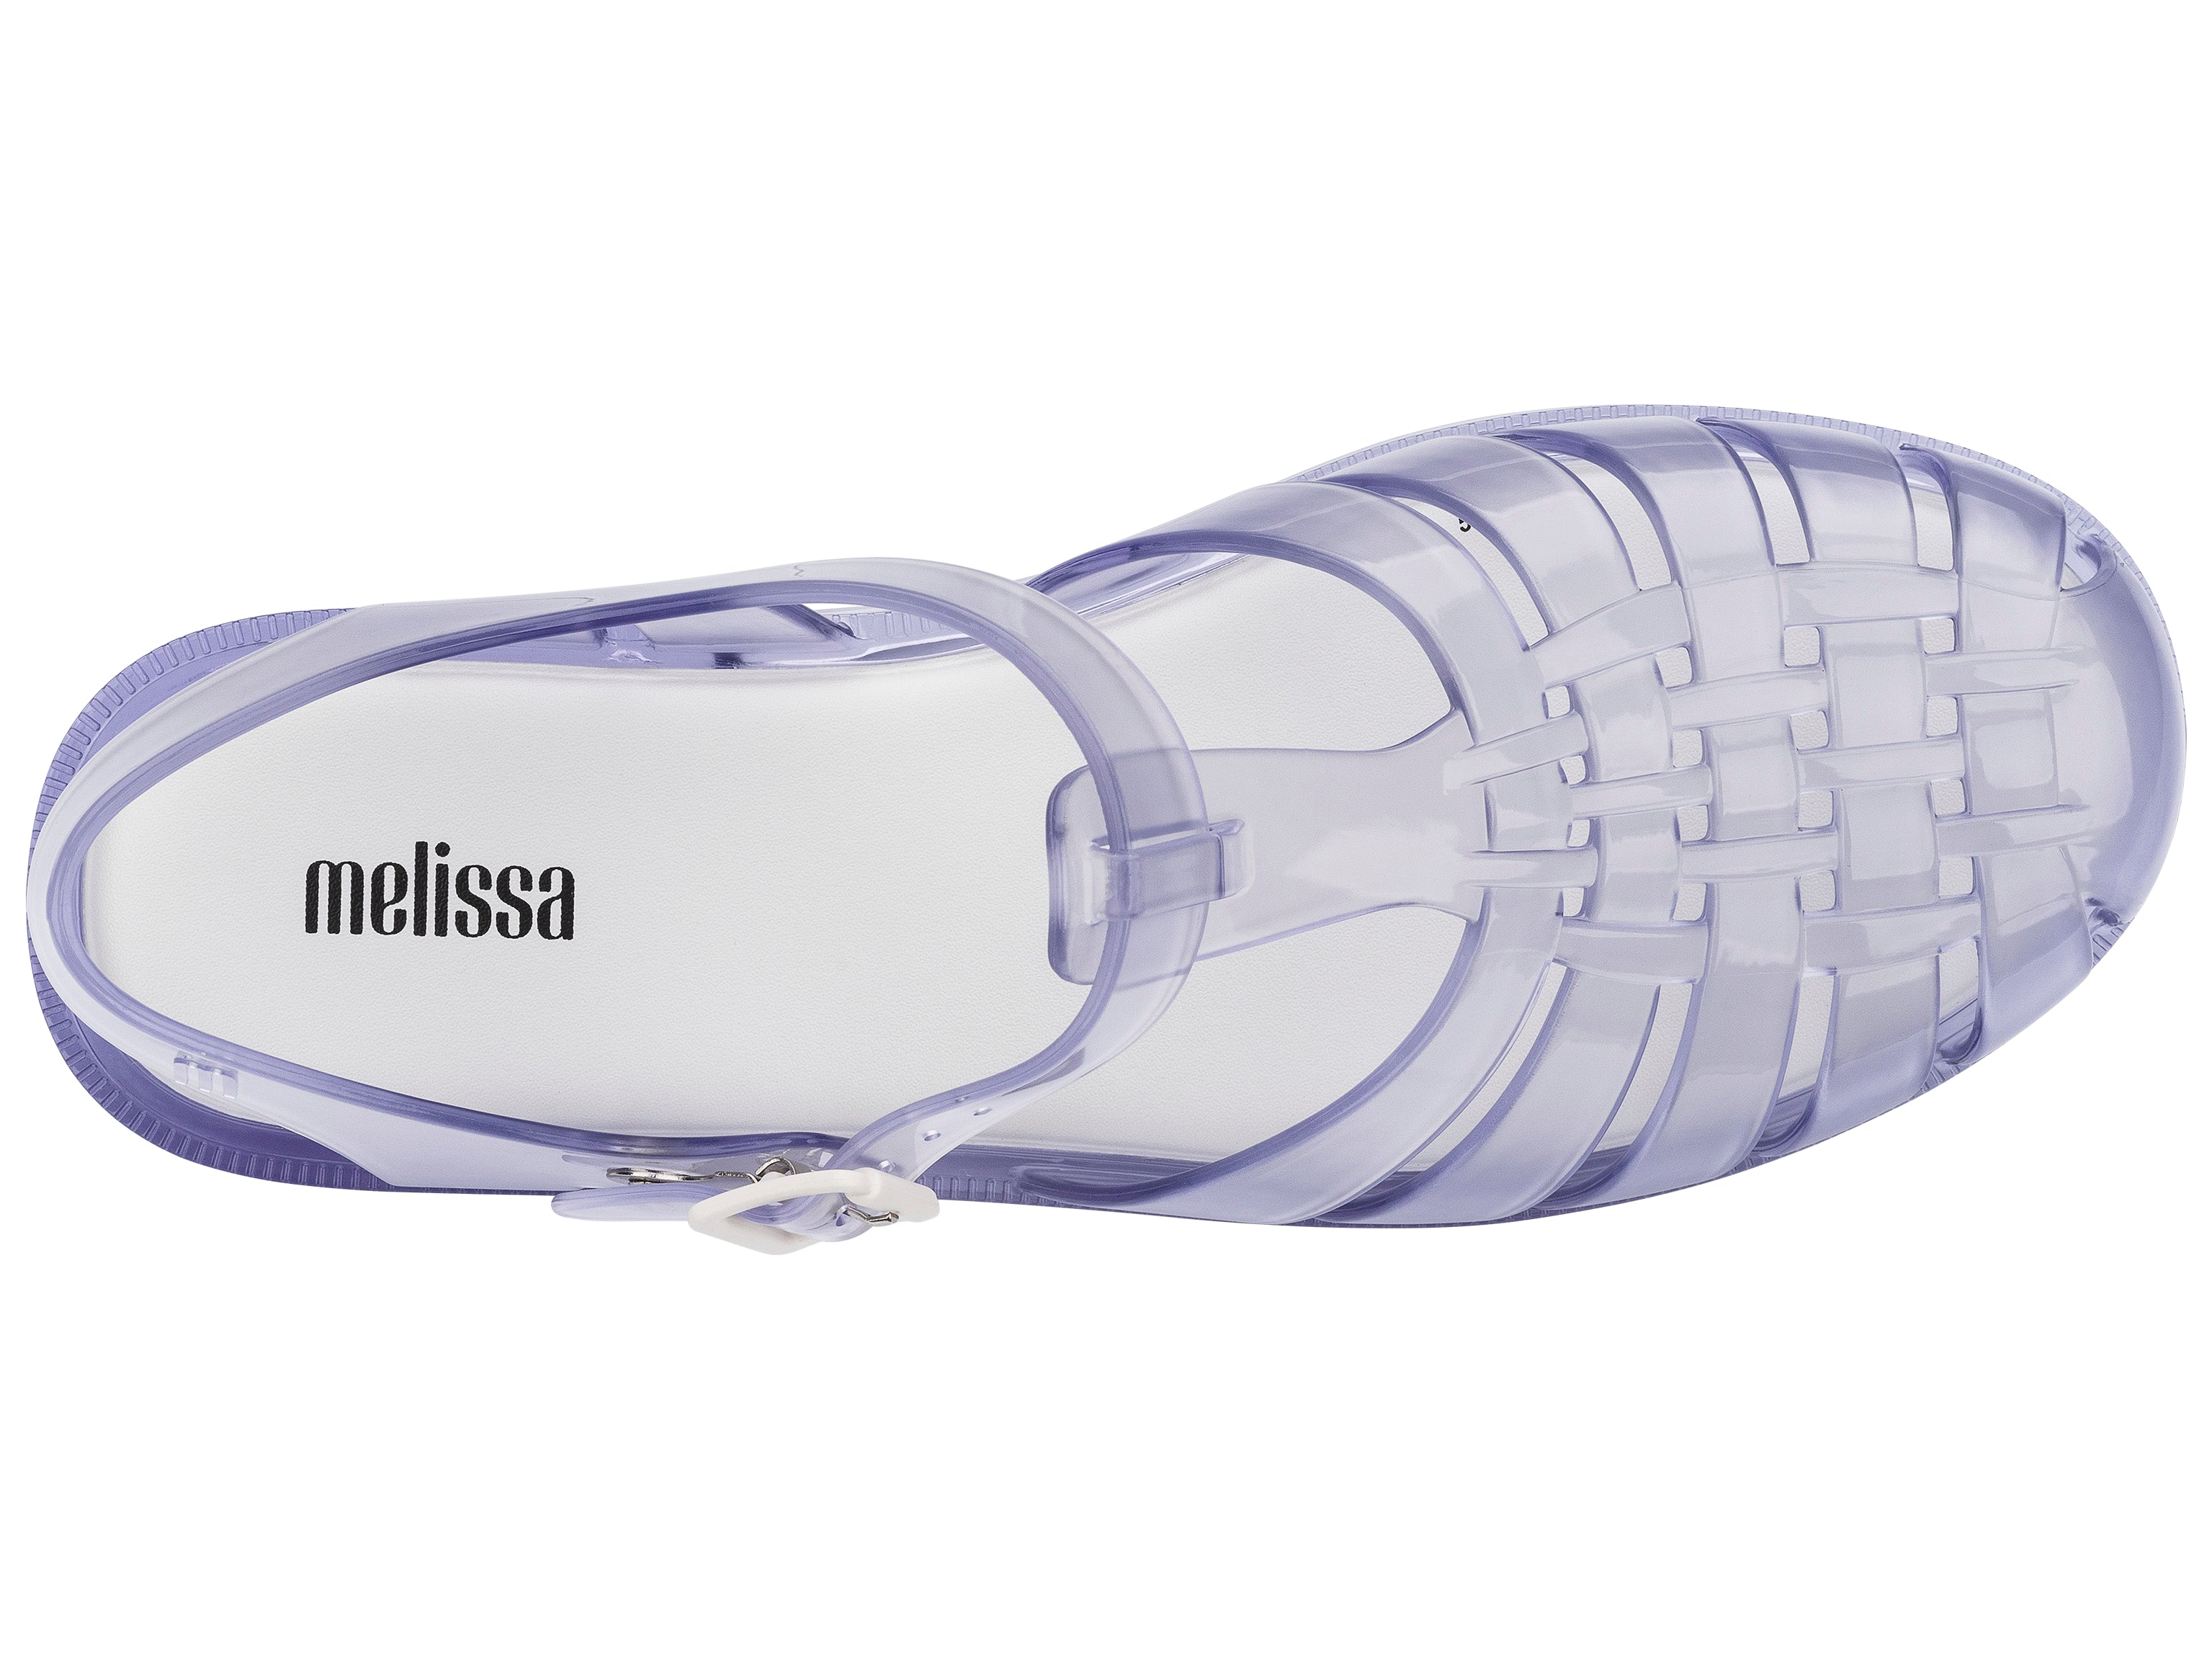 Melissa Possession Sandal - Clear